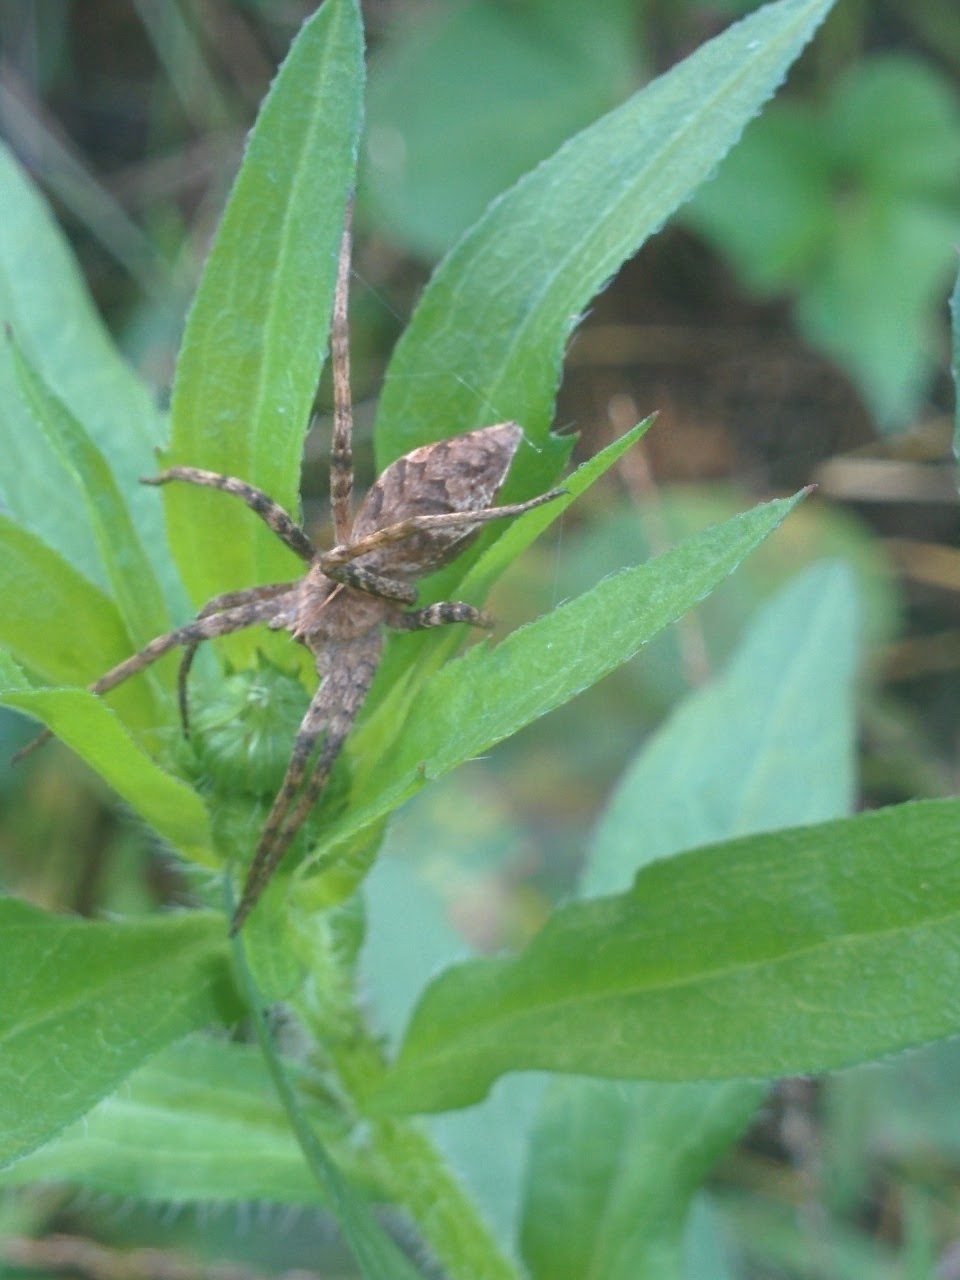 IMG_20151014_130054.jpg 개망초 위에서 쉬는 거미 한마리 -- 서성거미 종류